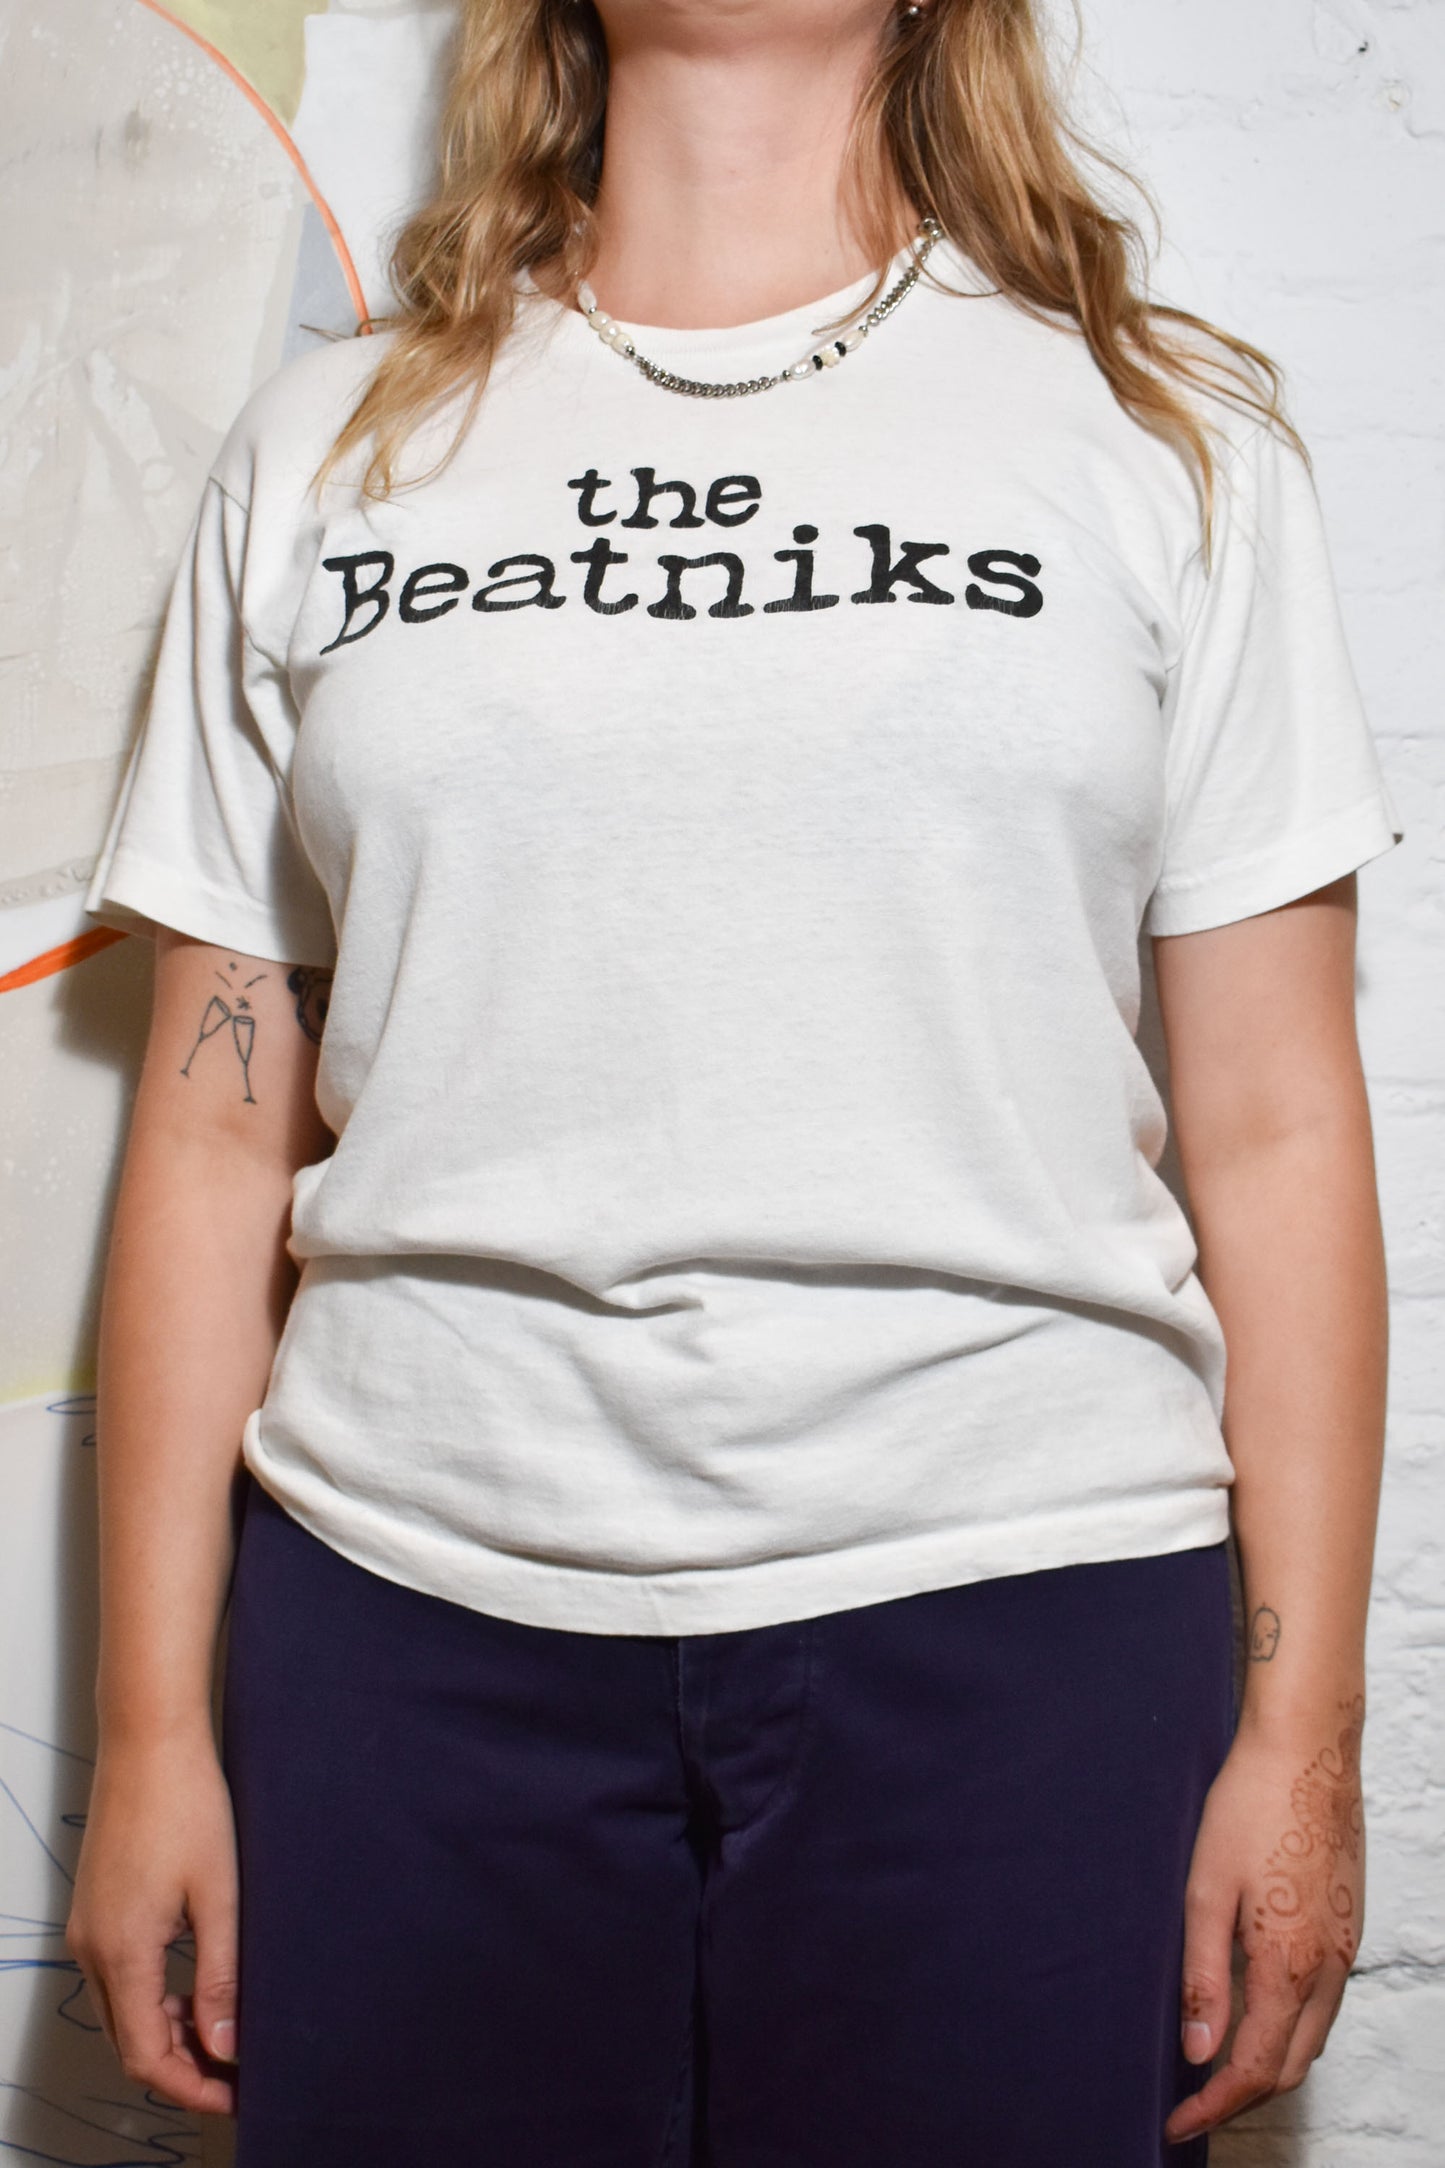 Vintage 1990s "The Beatniks" T-shirt